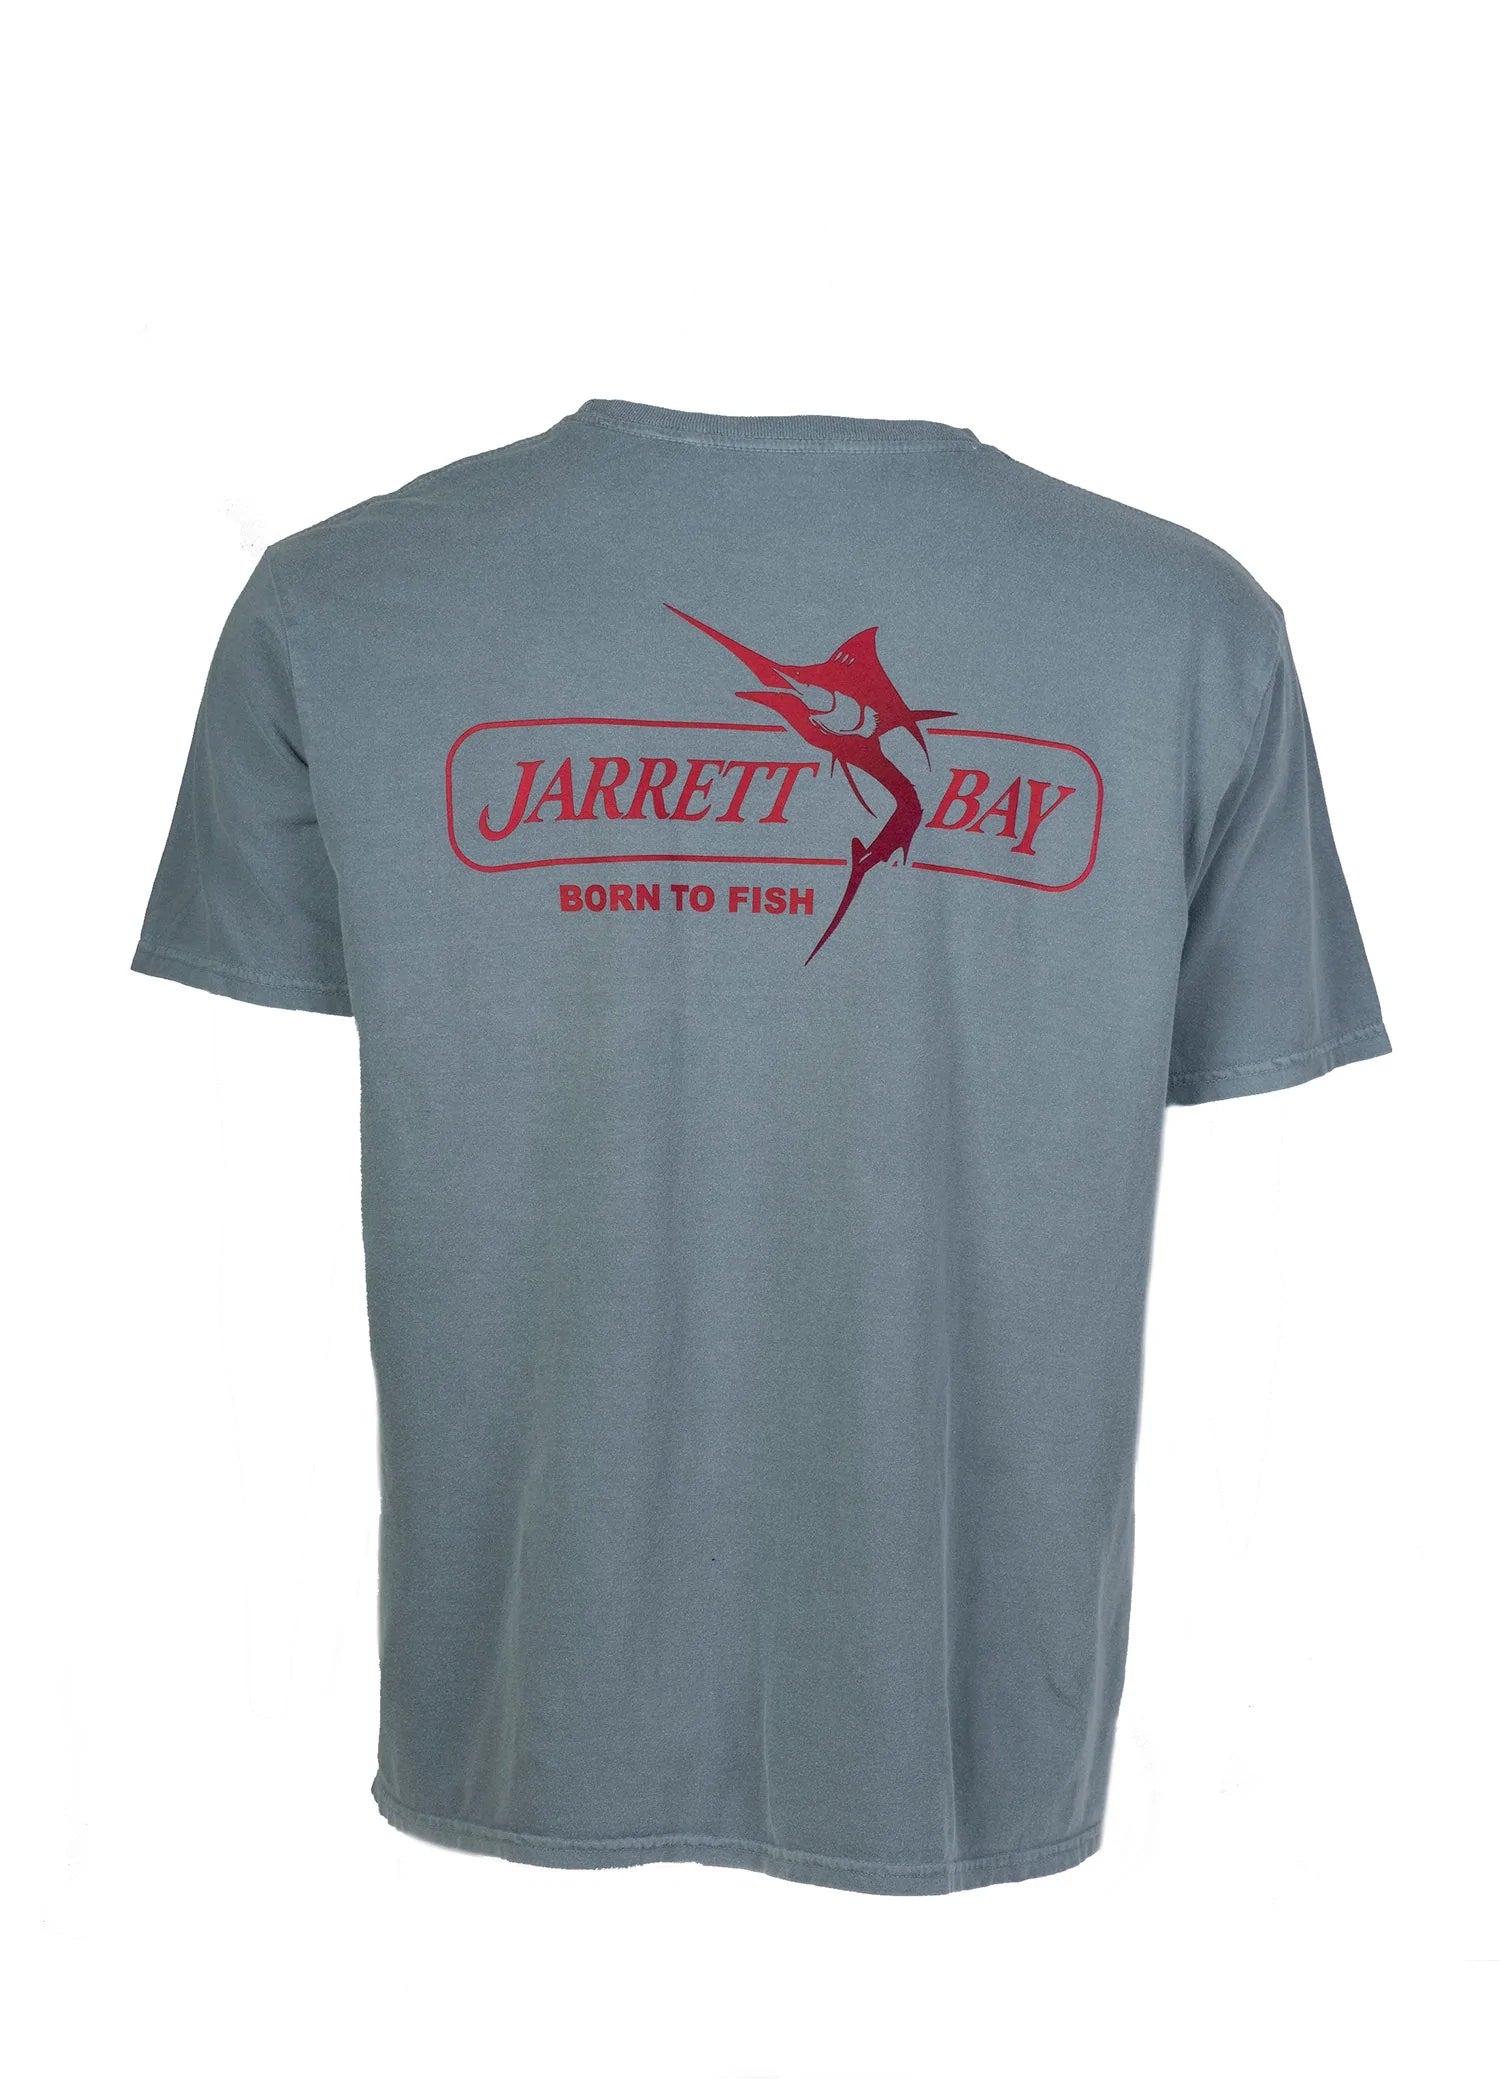 Born to Fish T-Shirt - Jarrett Bay Boathouse